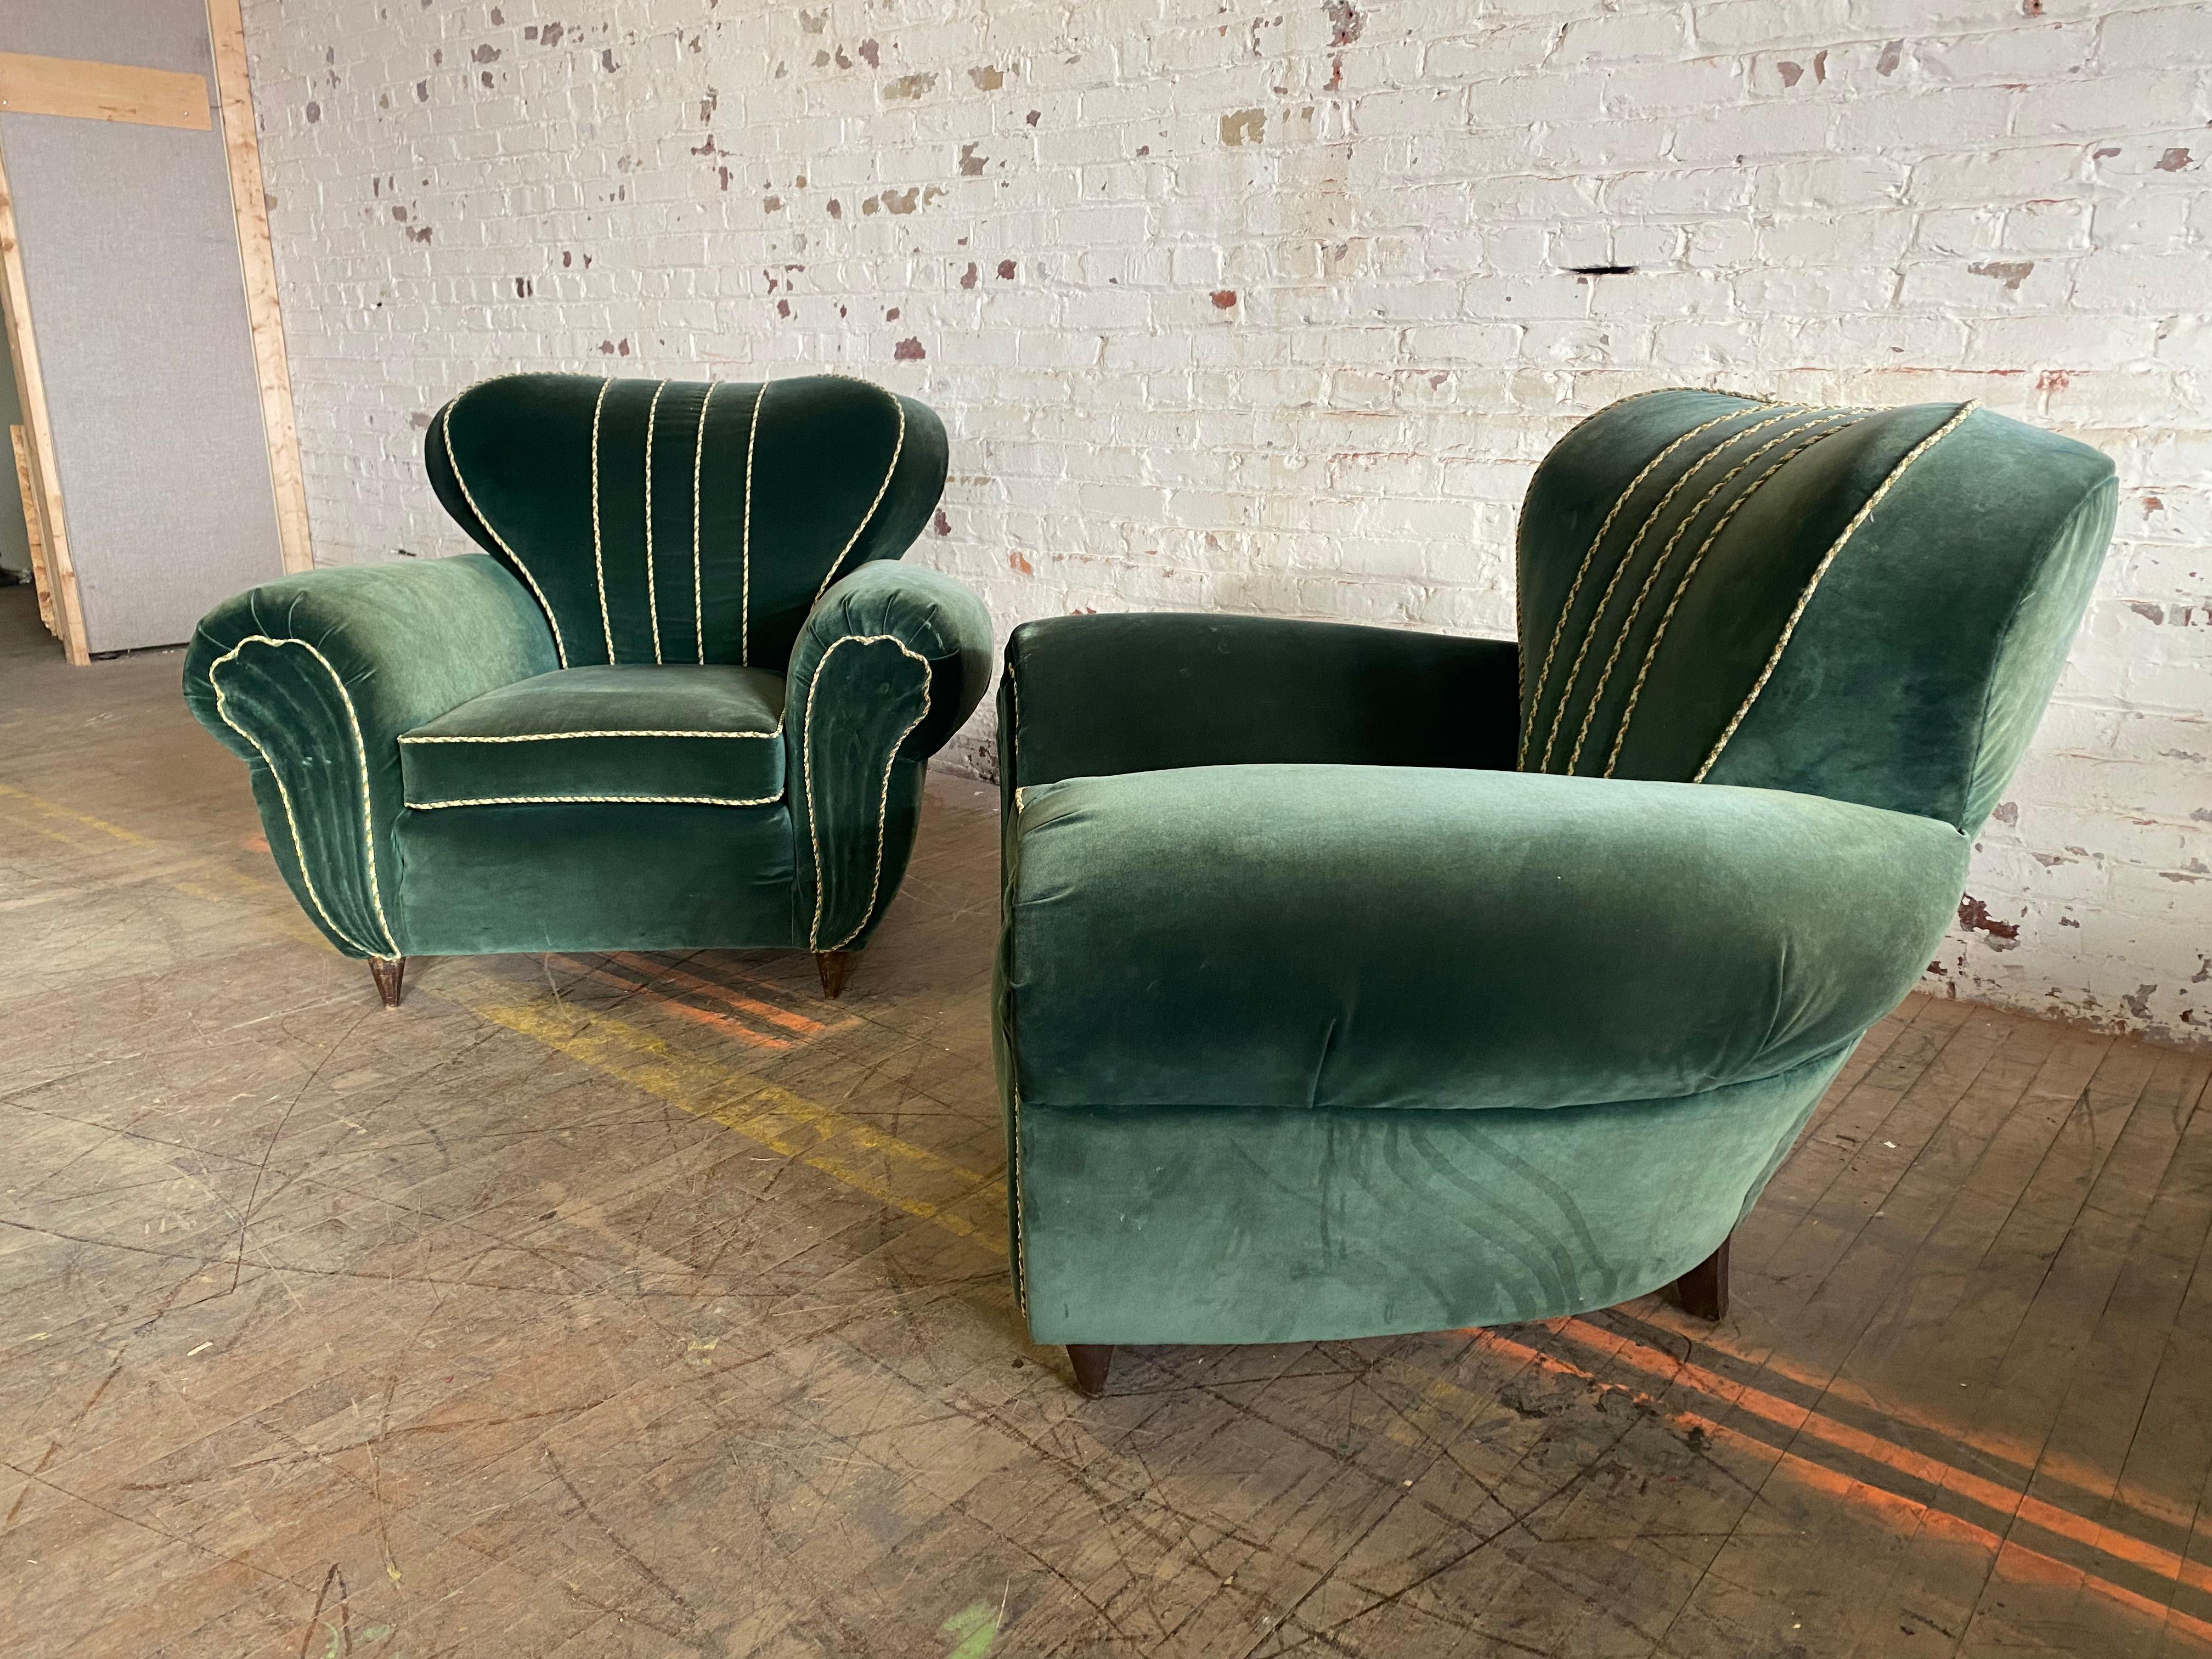 1940s Art Deco Italian Club Chairs, Unusual Form, Oversized by Guglielmo Ulrich For Sale 3